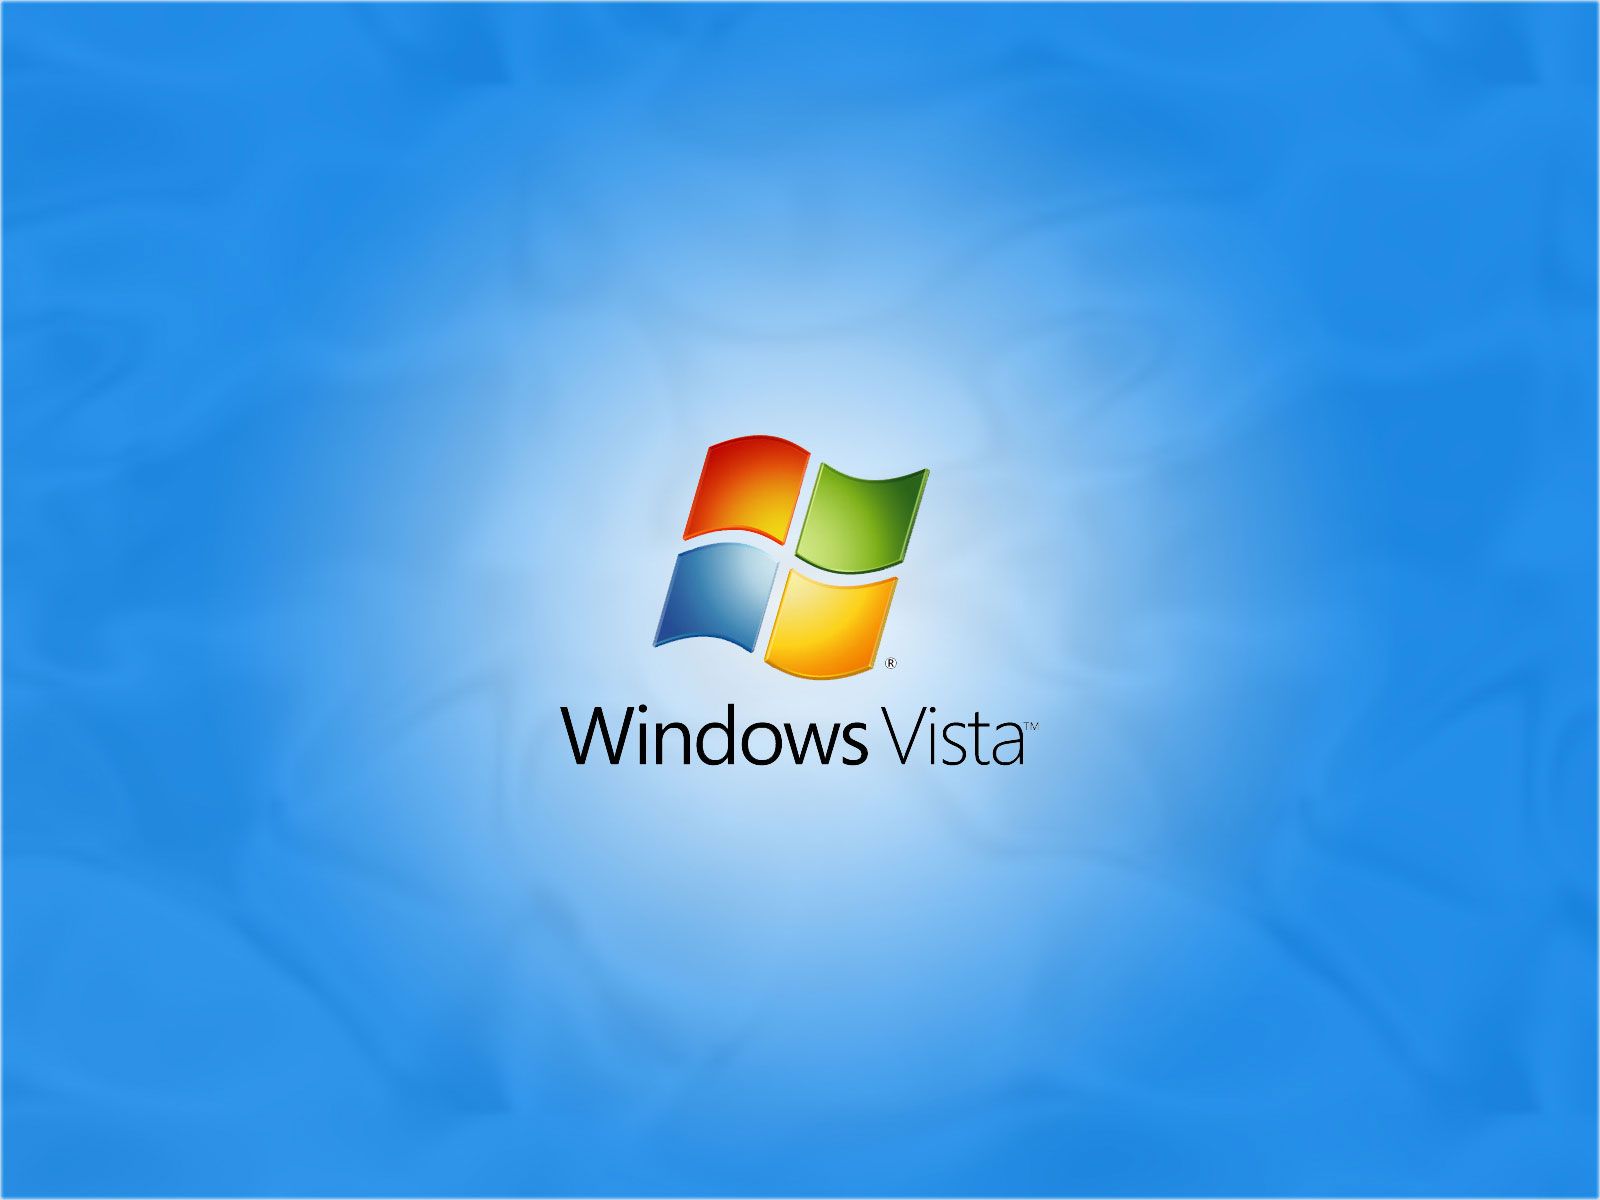 Windows Vista Wallpaper Set 12 | Awesome Wallpapers